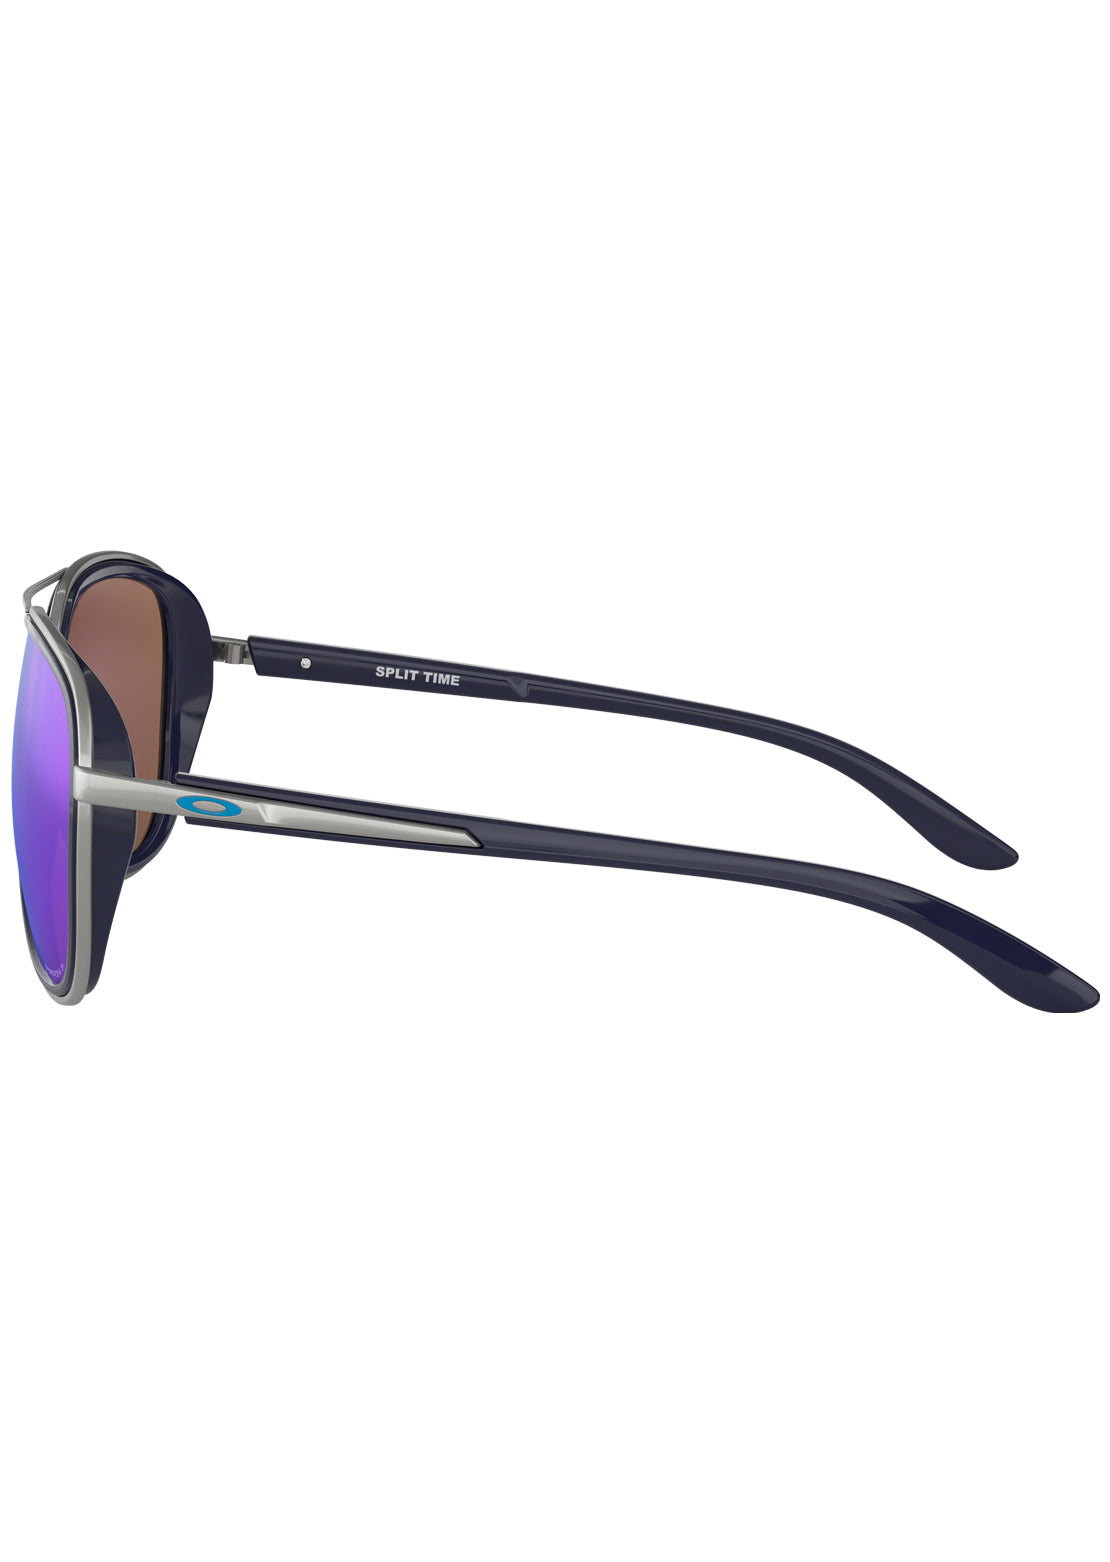 Oakley Women’s Split Time Prizm Polarized Sunglasses Navy Satin Chrome/Prizm Sapphire Iridium